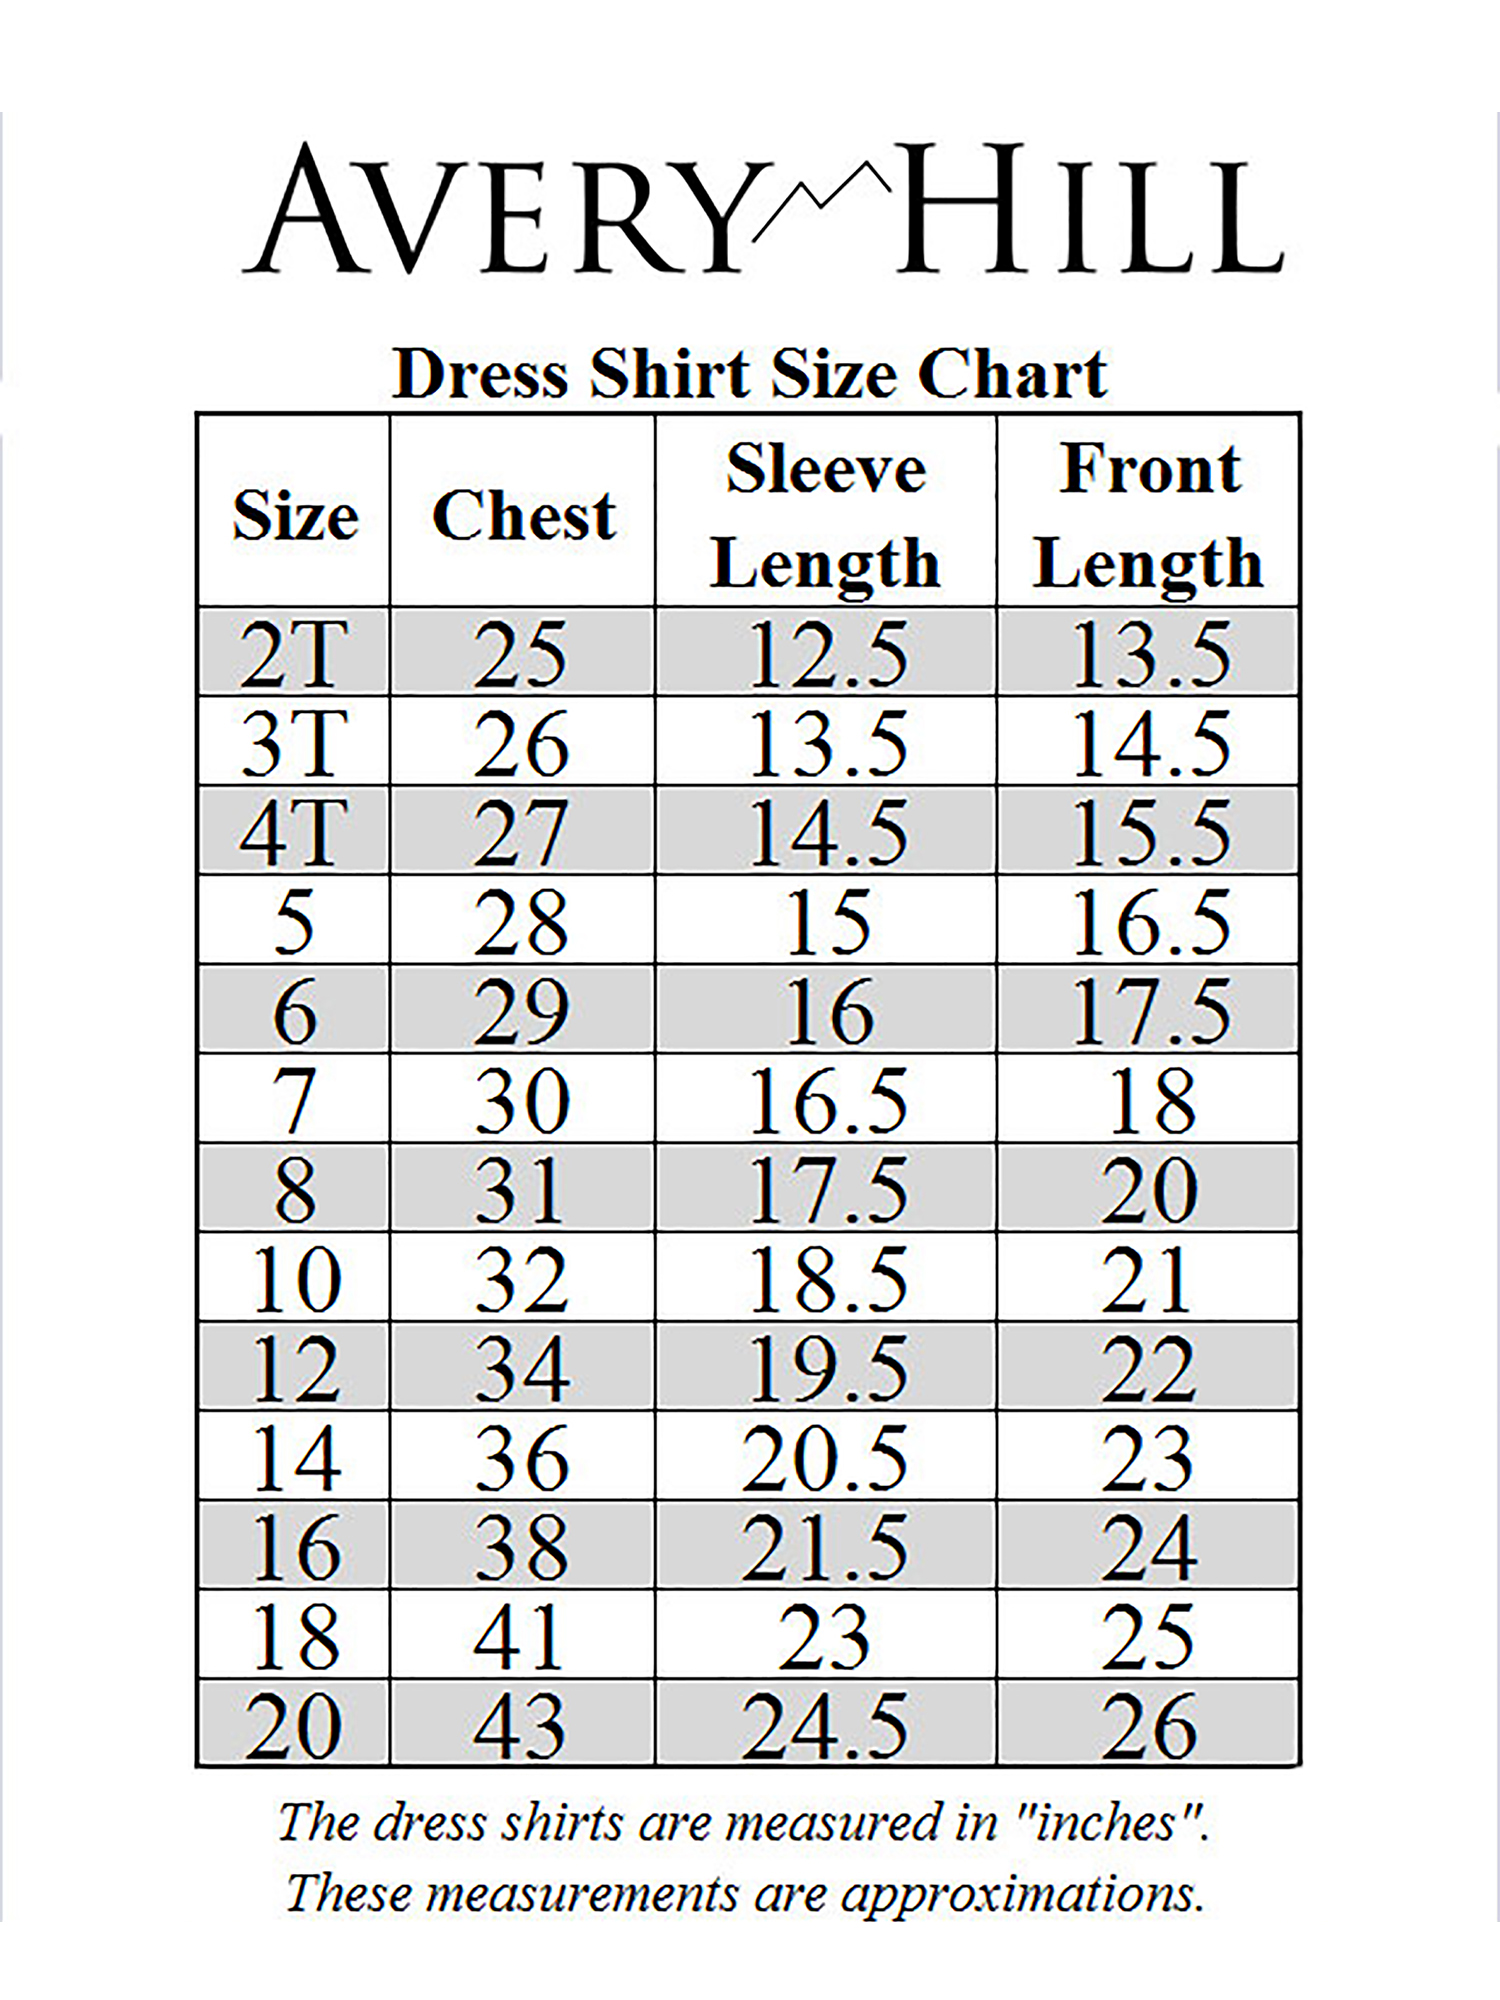 Boys Long Sleeve Dress Shirt with Windsor Tie - image 2 of 2